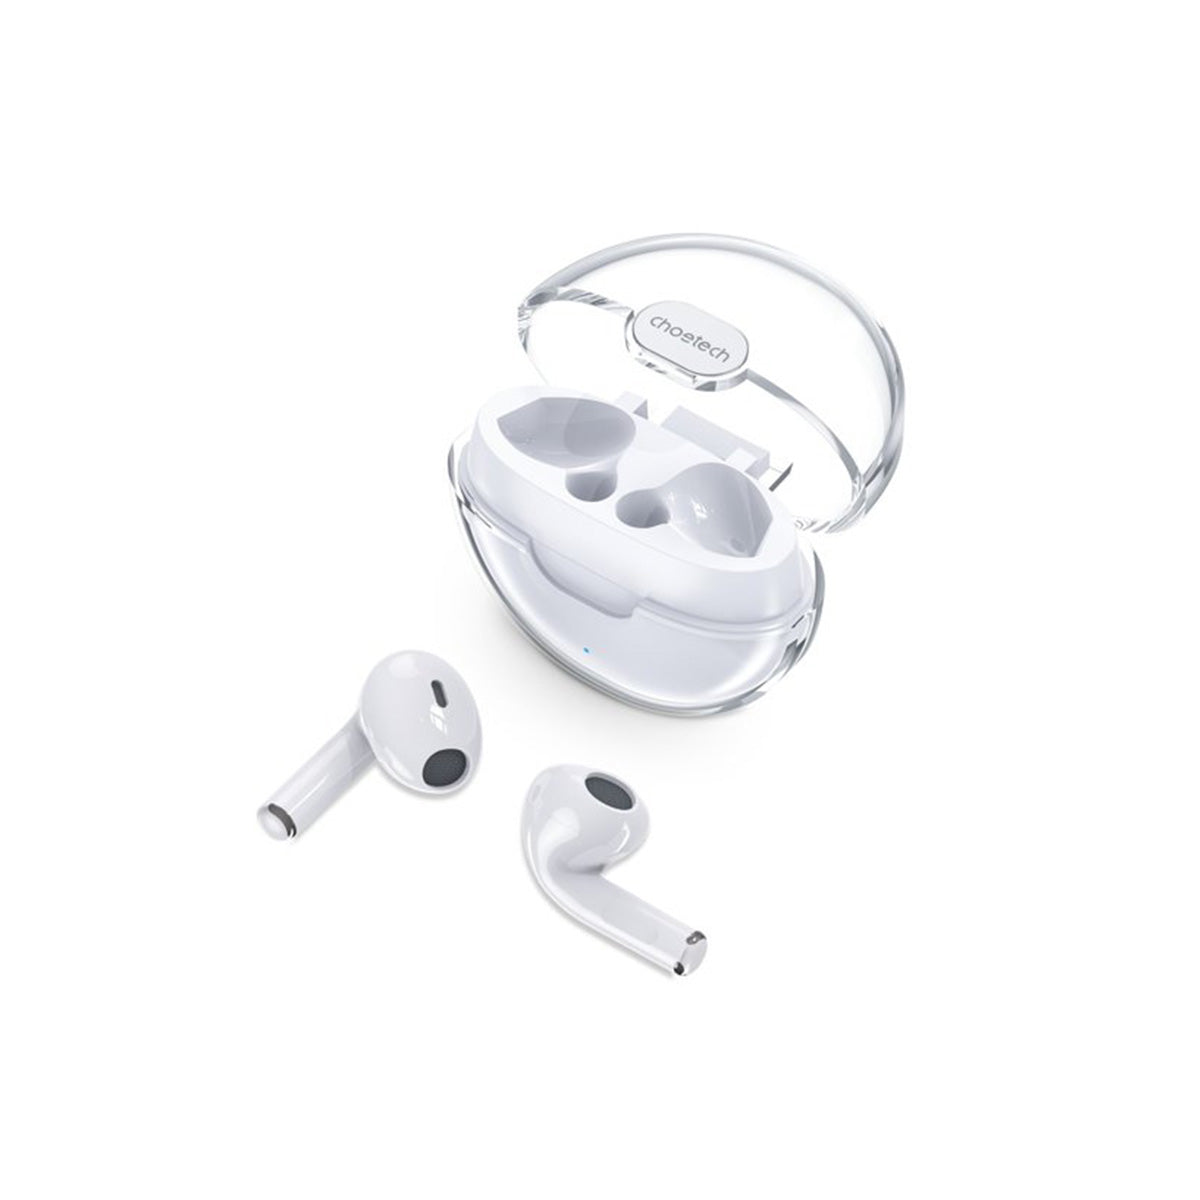 Choetech Translucent V5.0 True Wireless Earbuds BH-T08 (White)